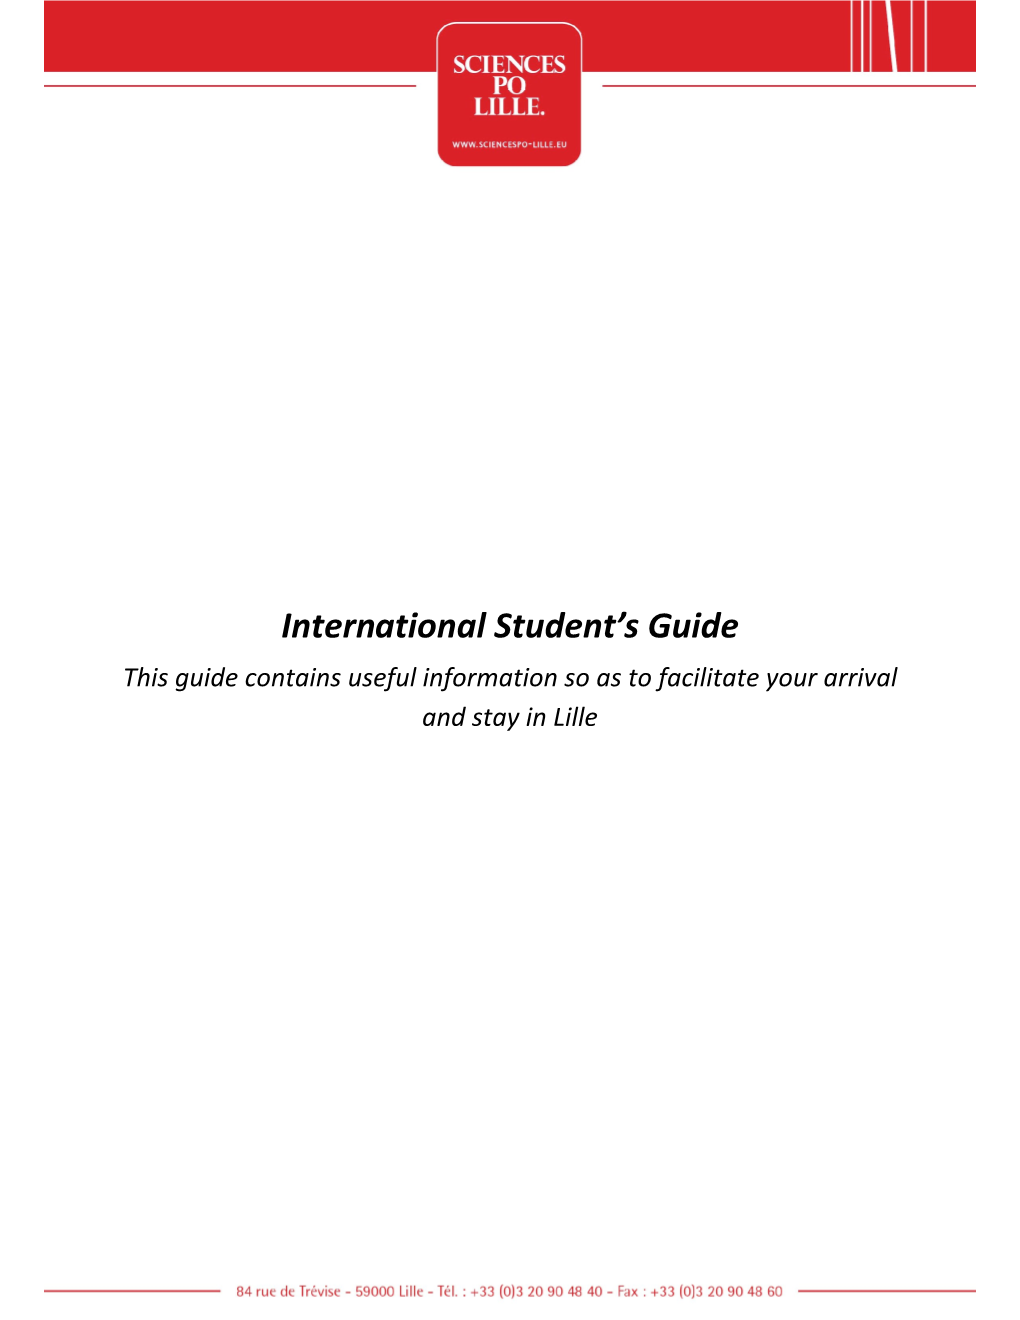 International Student's Guide